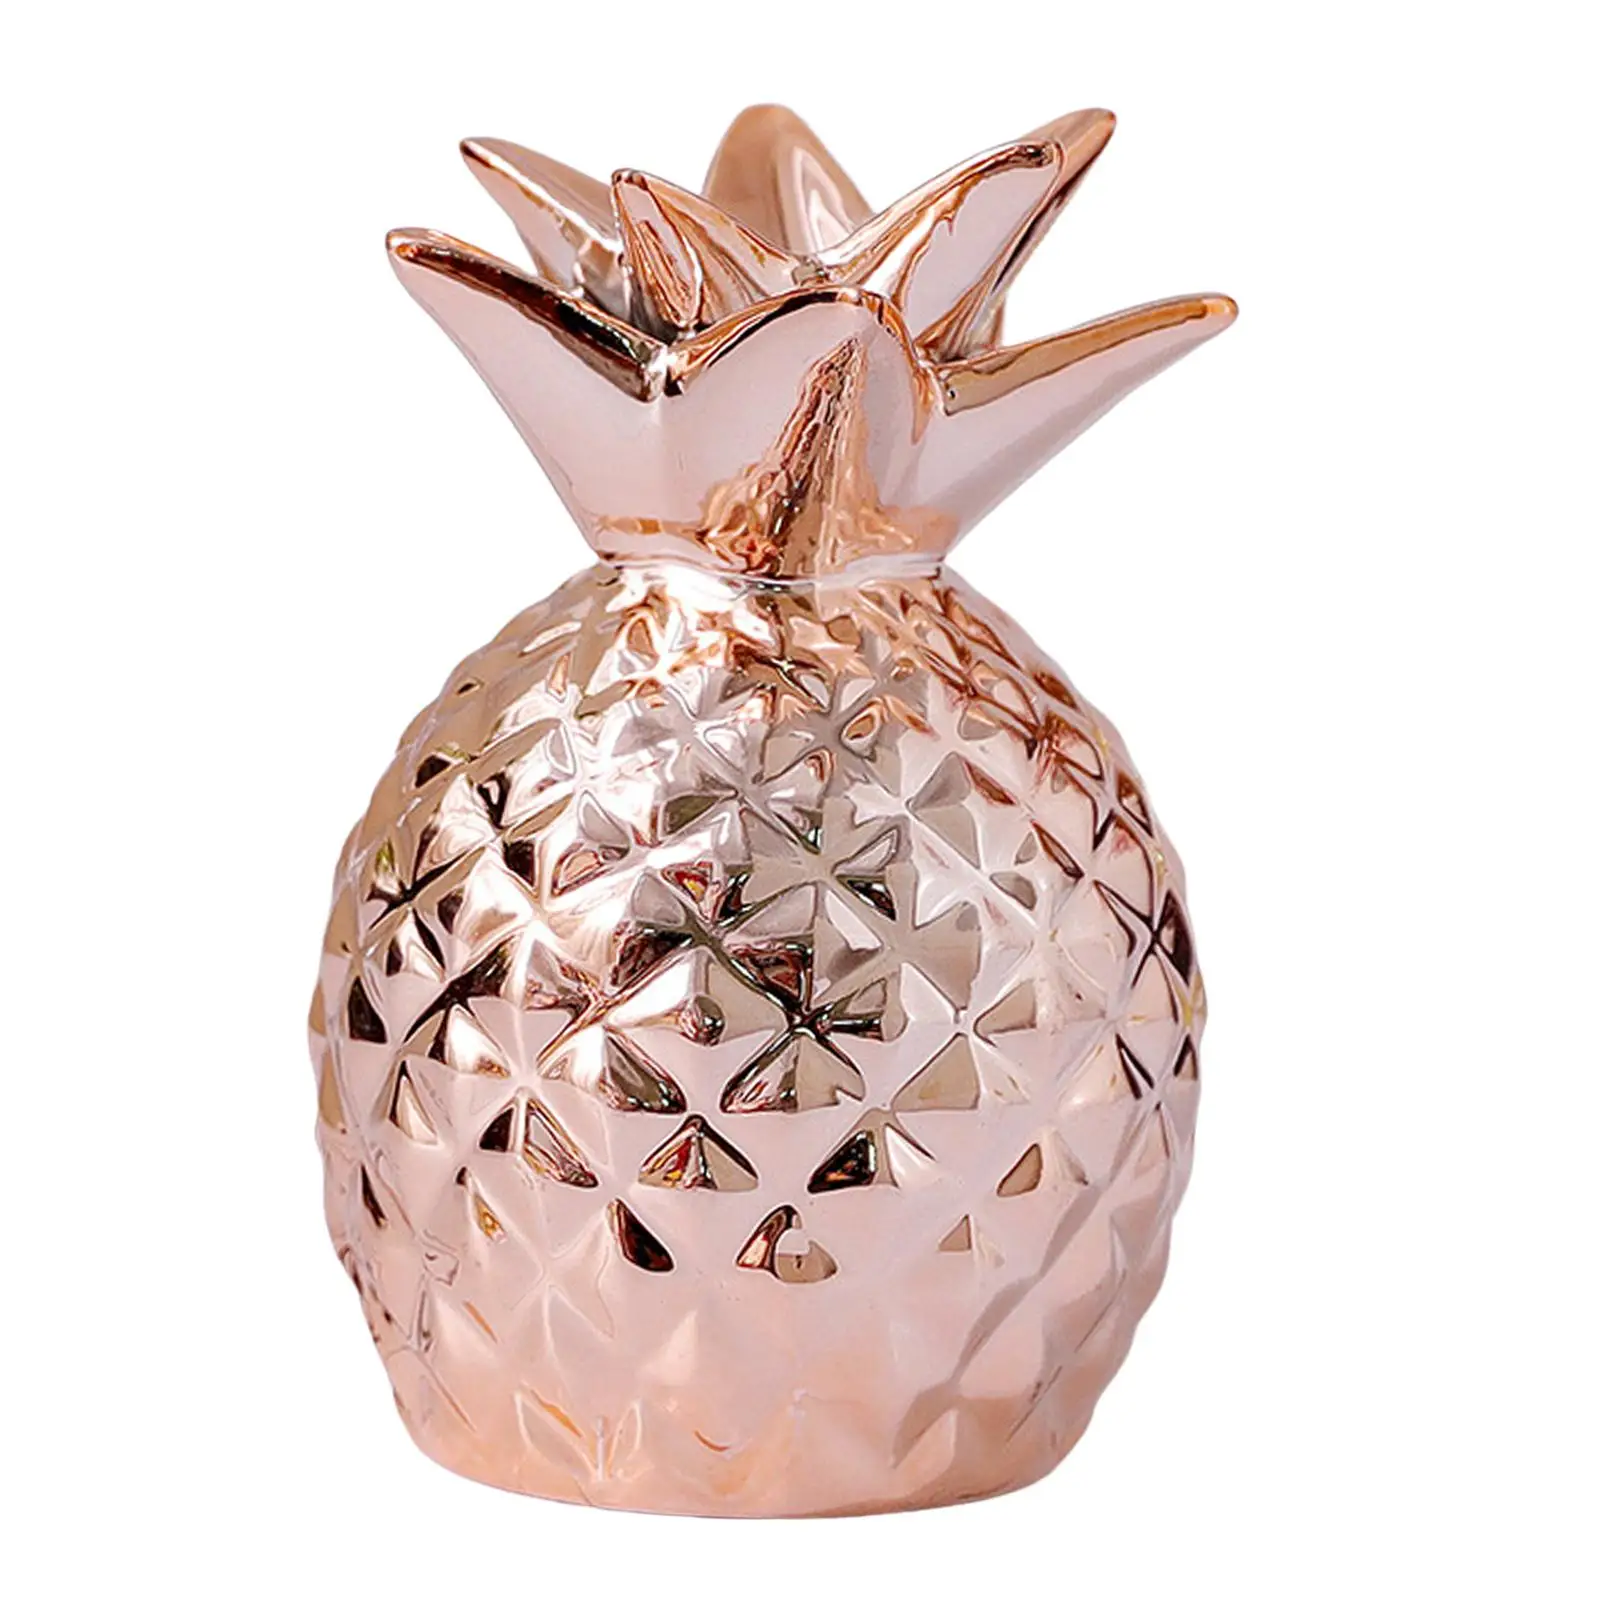 Ceramic Holder Saving box Decoration Cute Decorative Figurine Ornaments Pineapple Shape Money Box for Bedroom Office